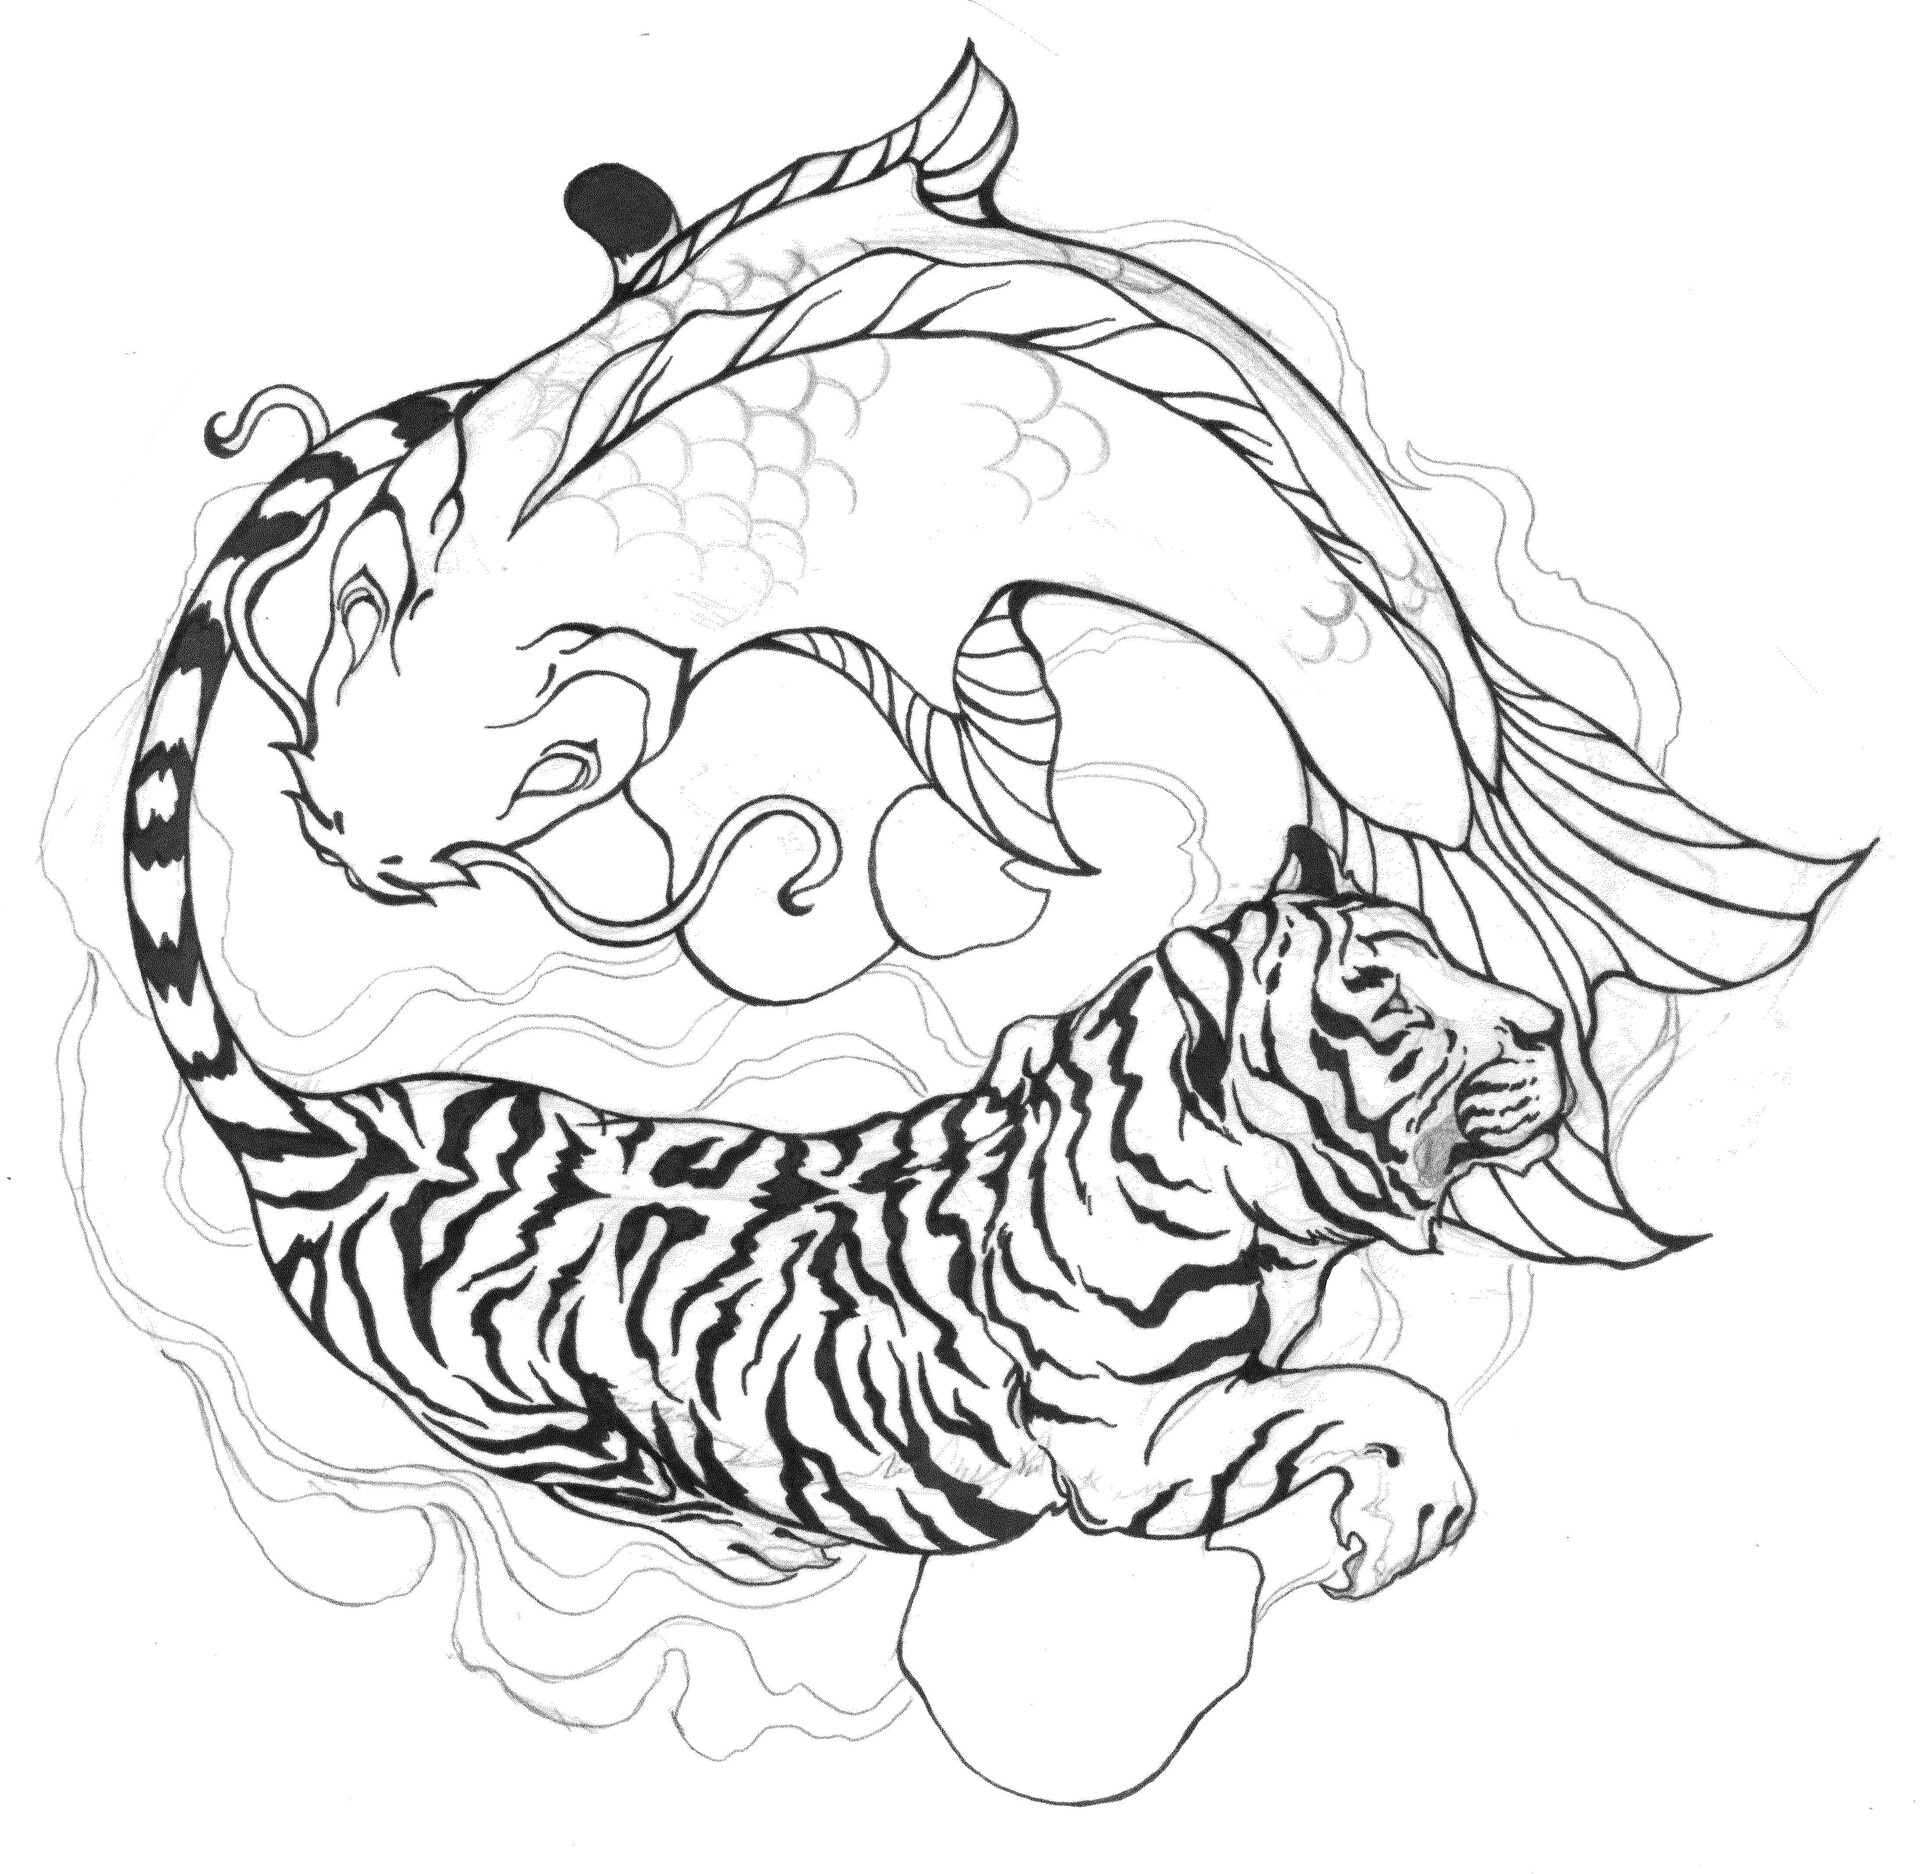 ArtStation - Tiger and Koi tattoo